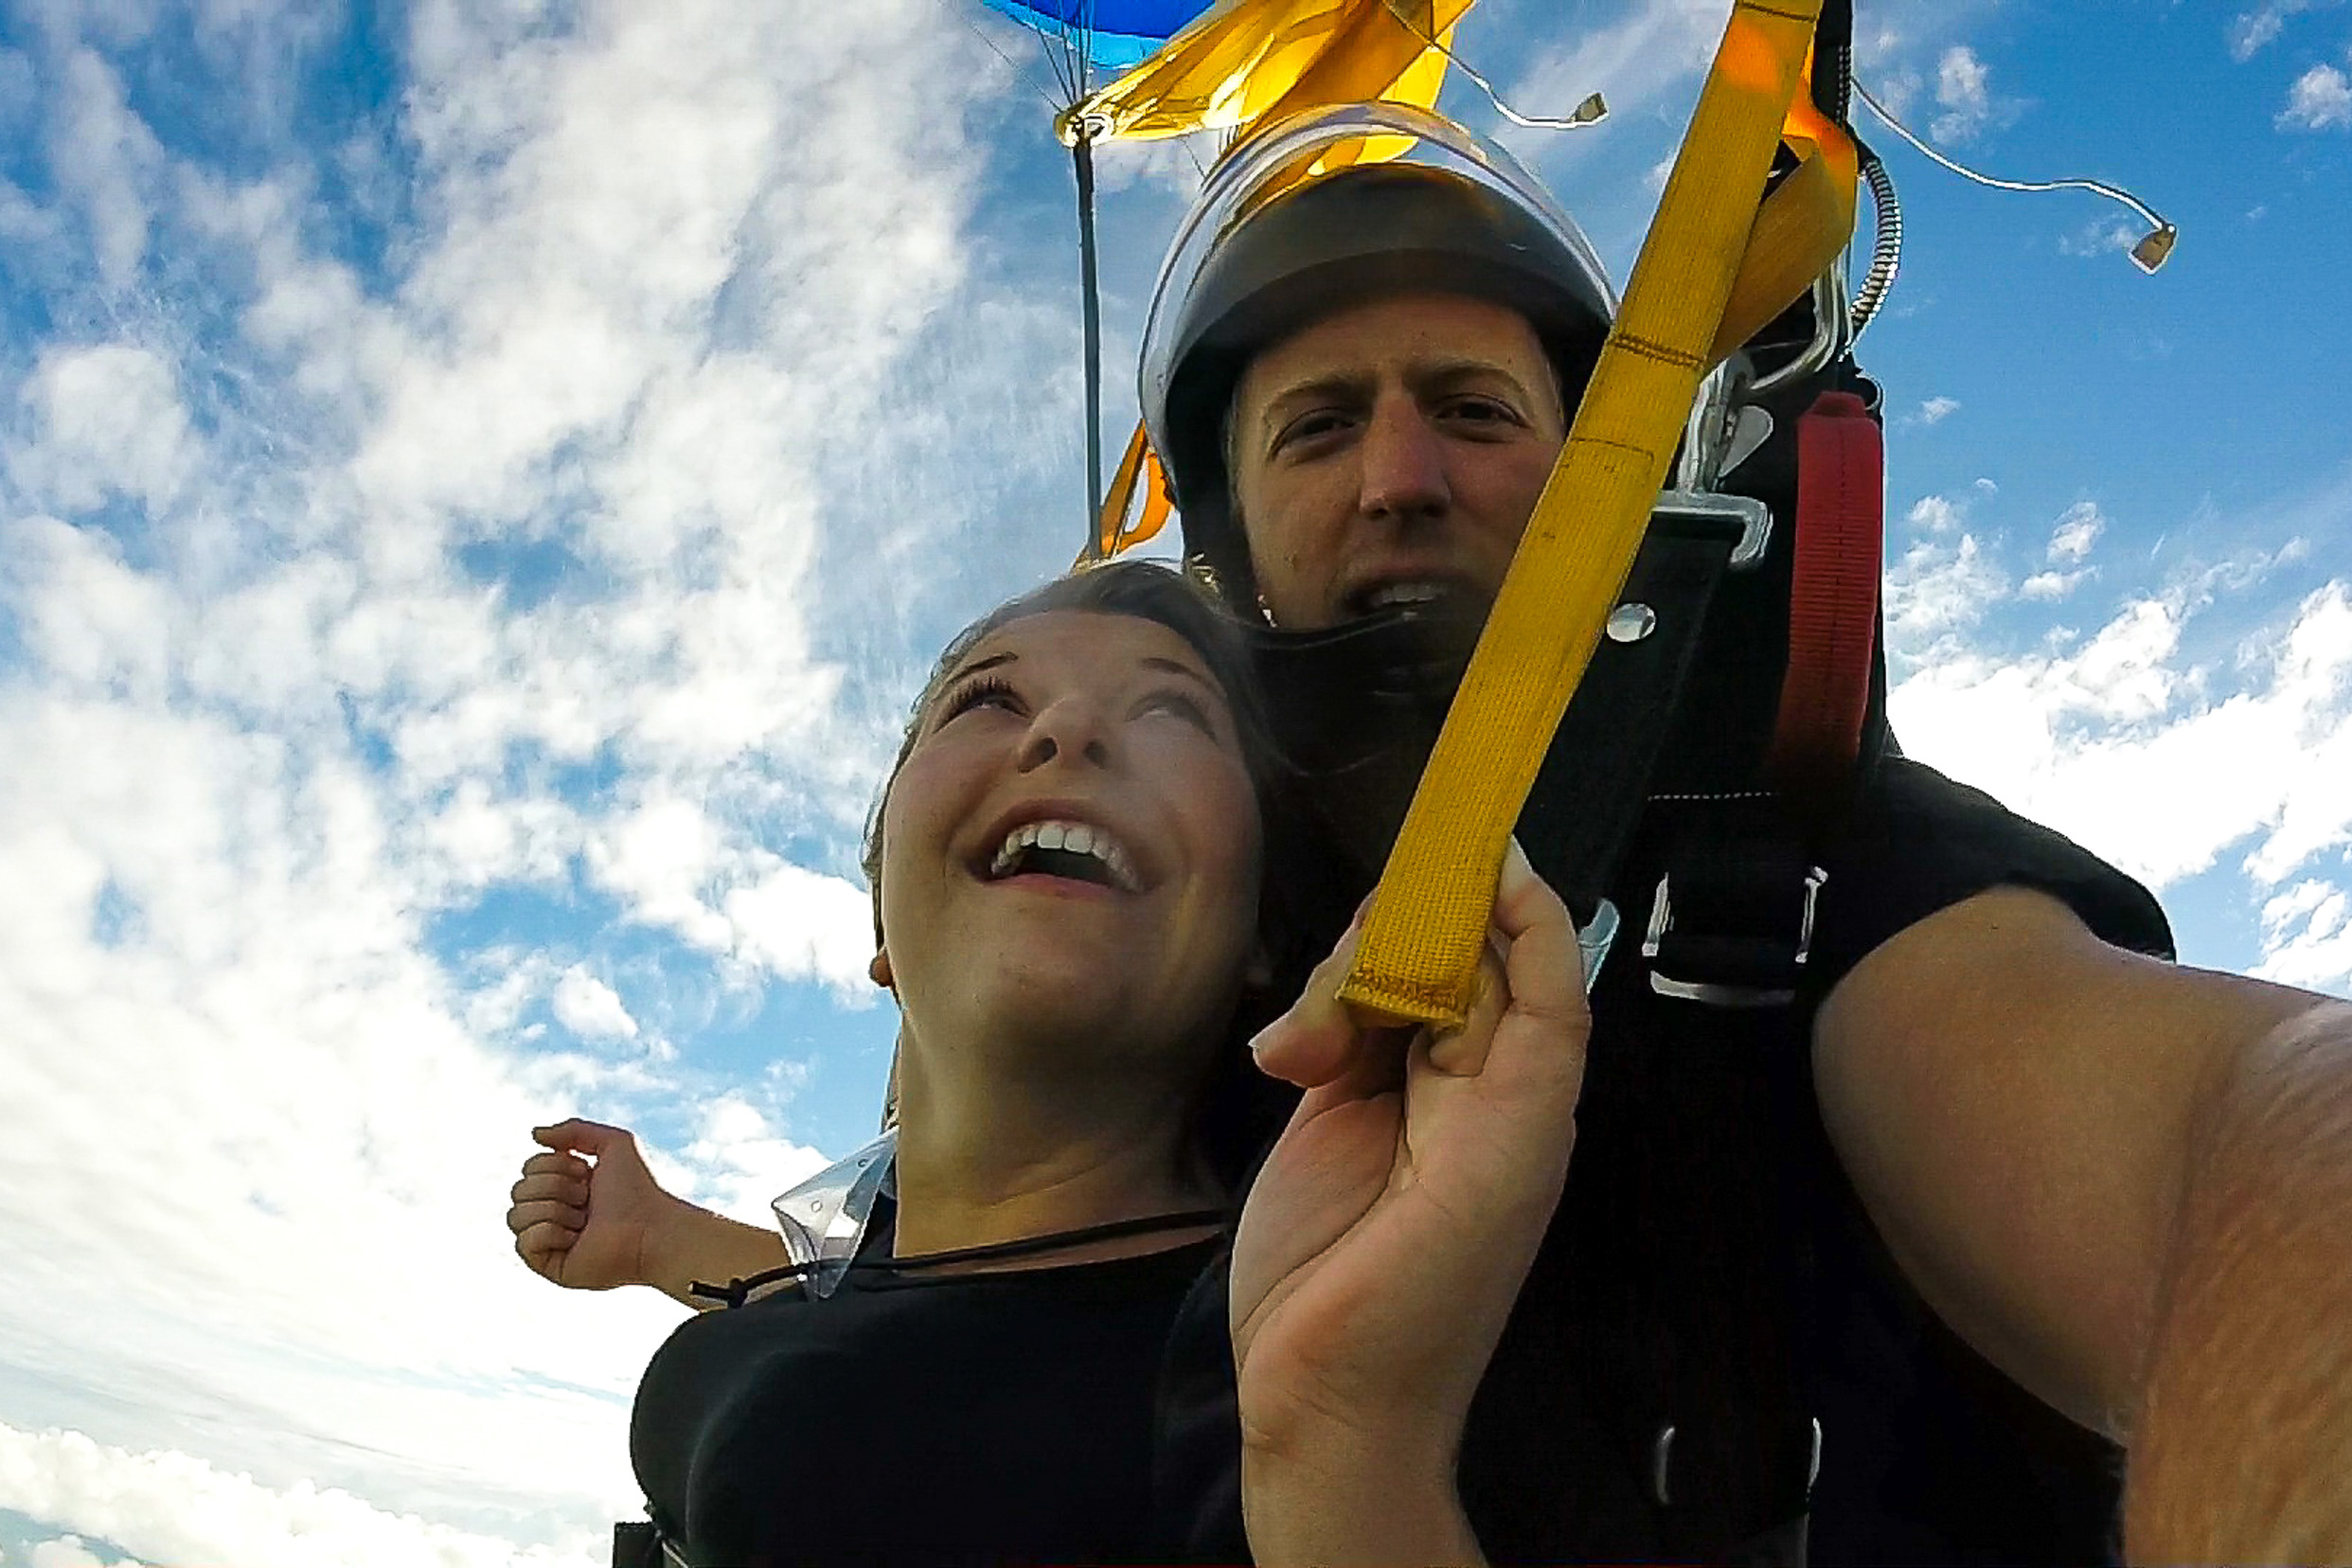 saut en parachute whitsunday islands skydive